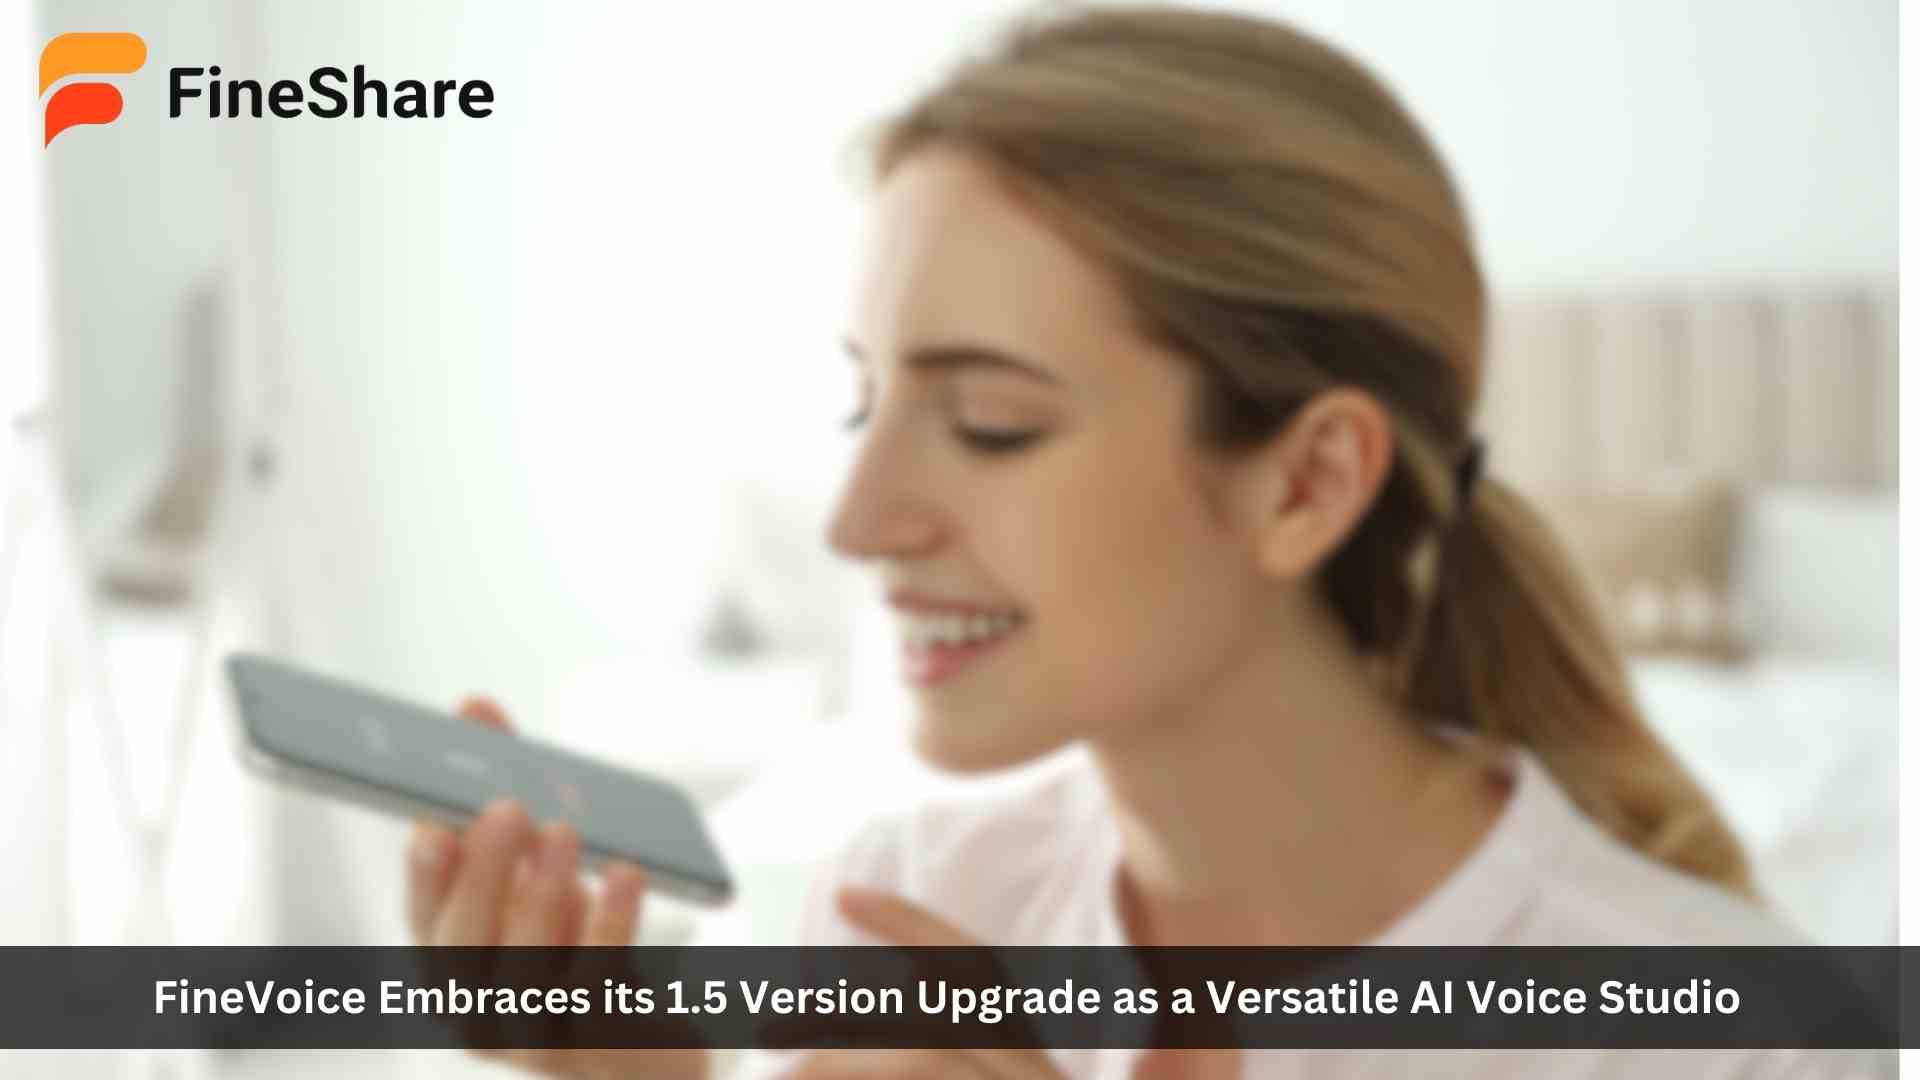 Fineshare FineVoice Now Embraces its 1.5 Version Upgrade as a Versatile AI Voice Studio